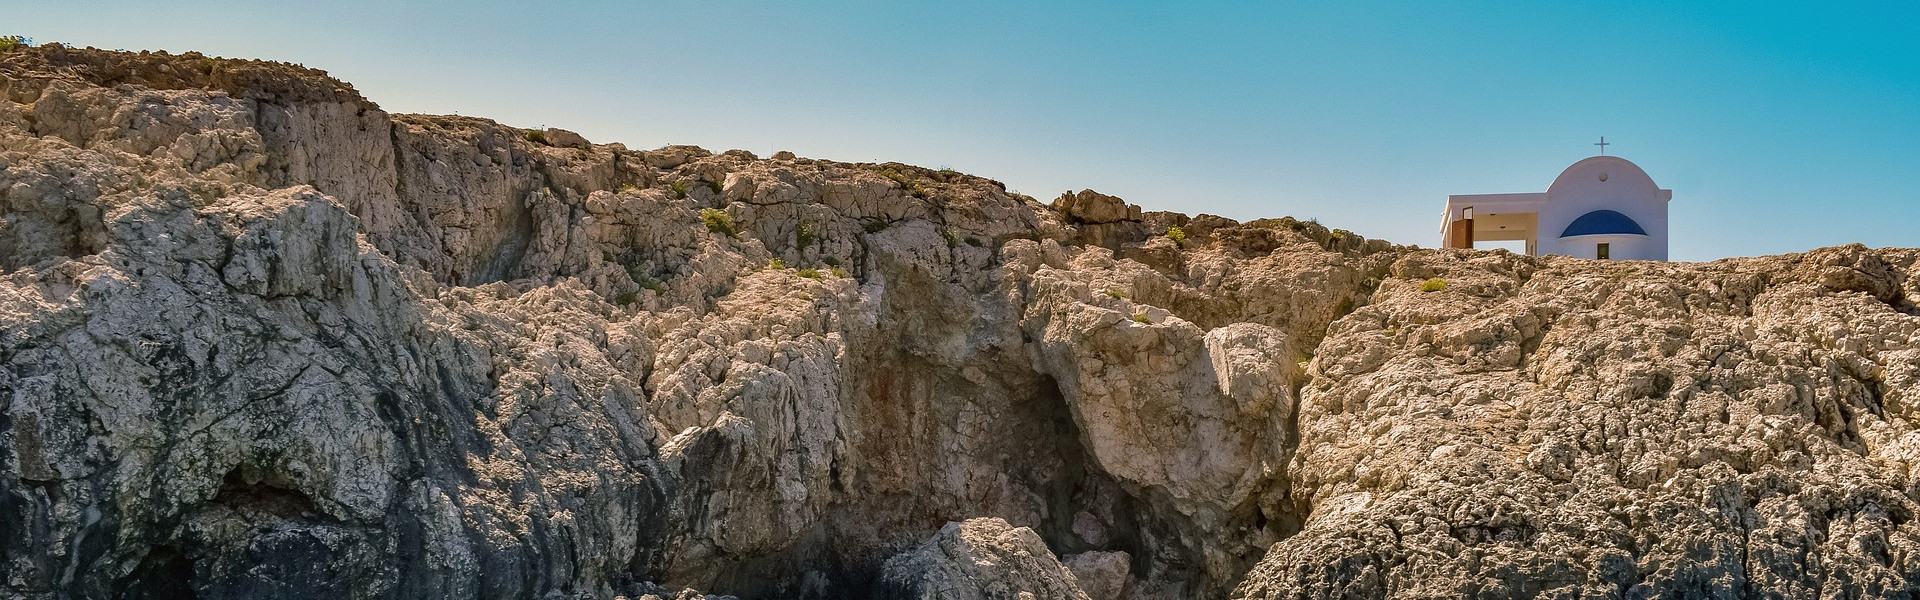 Destination image of Chypre